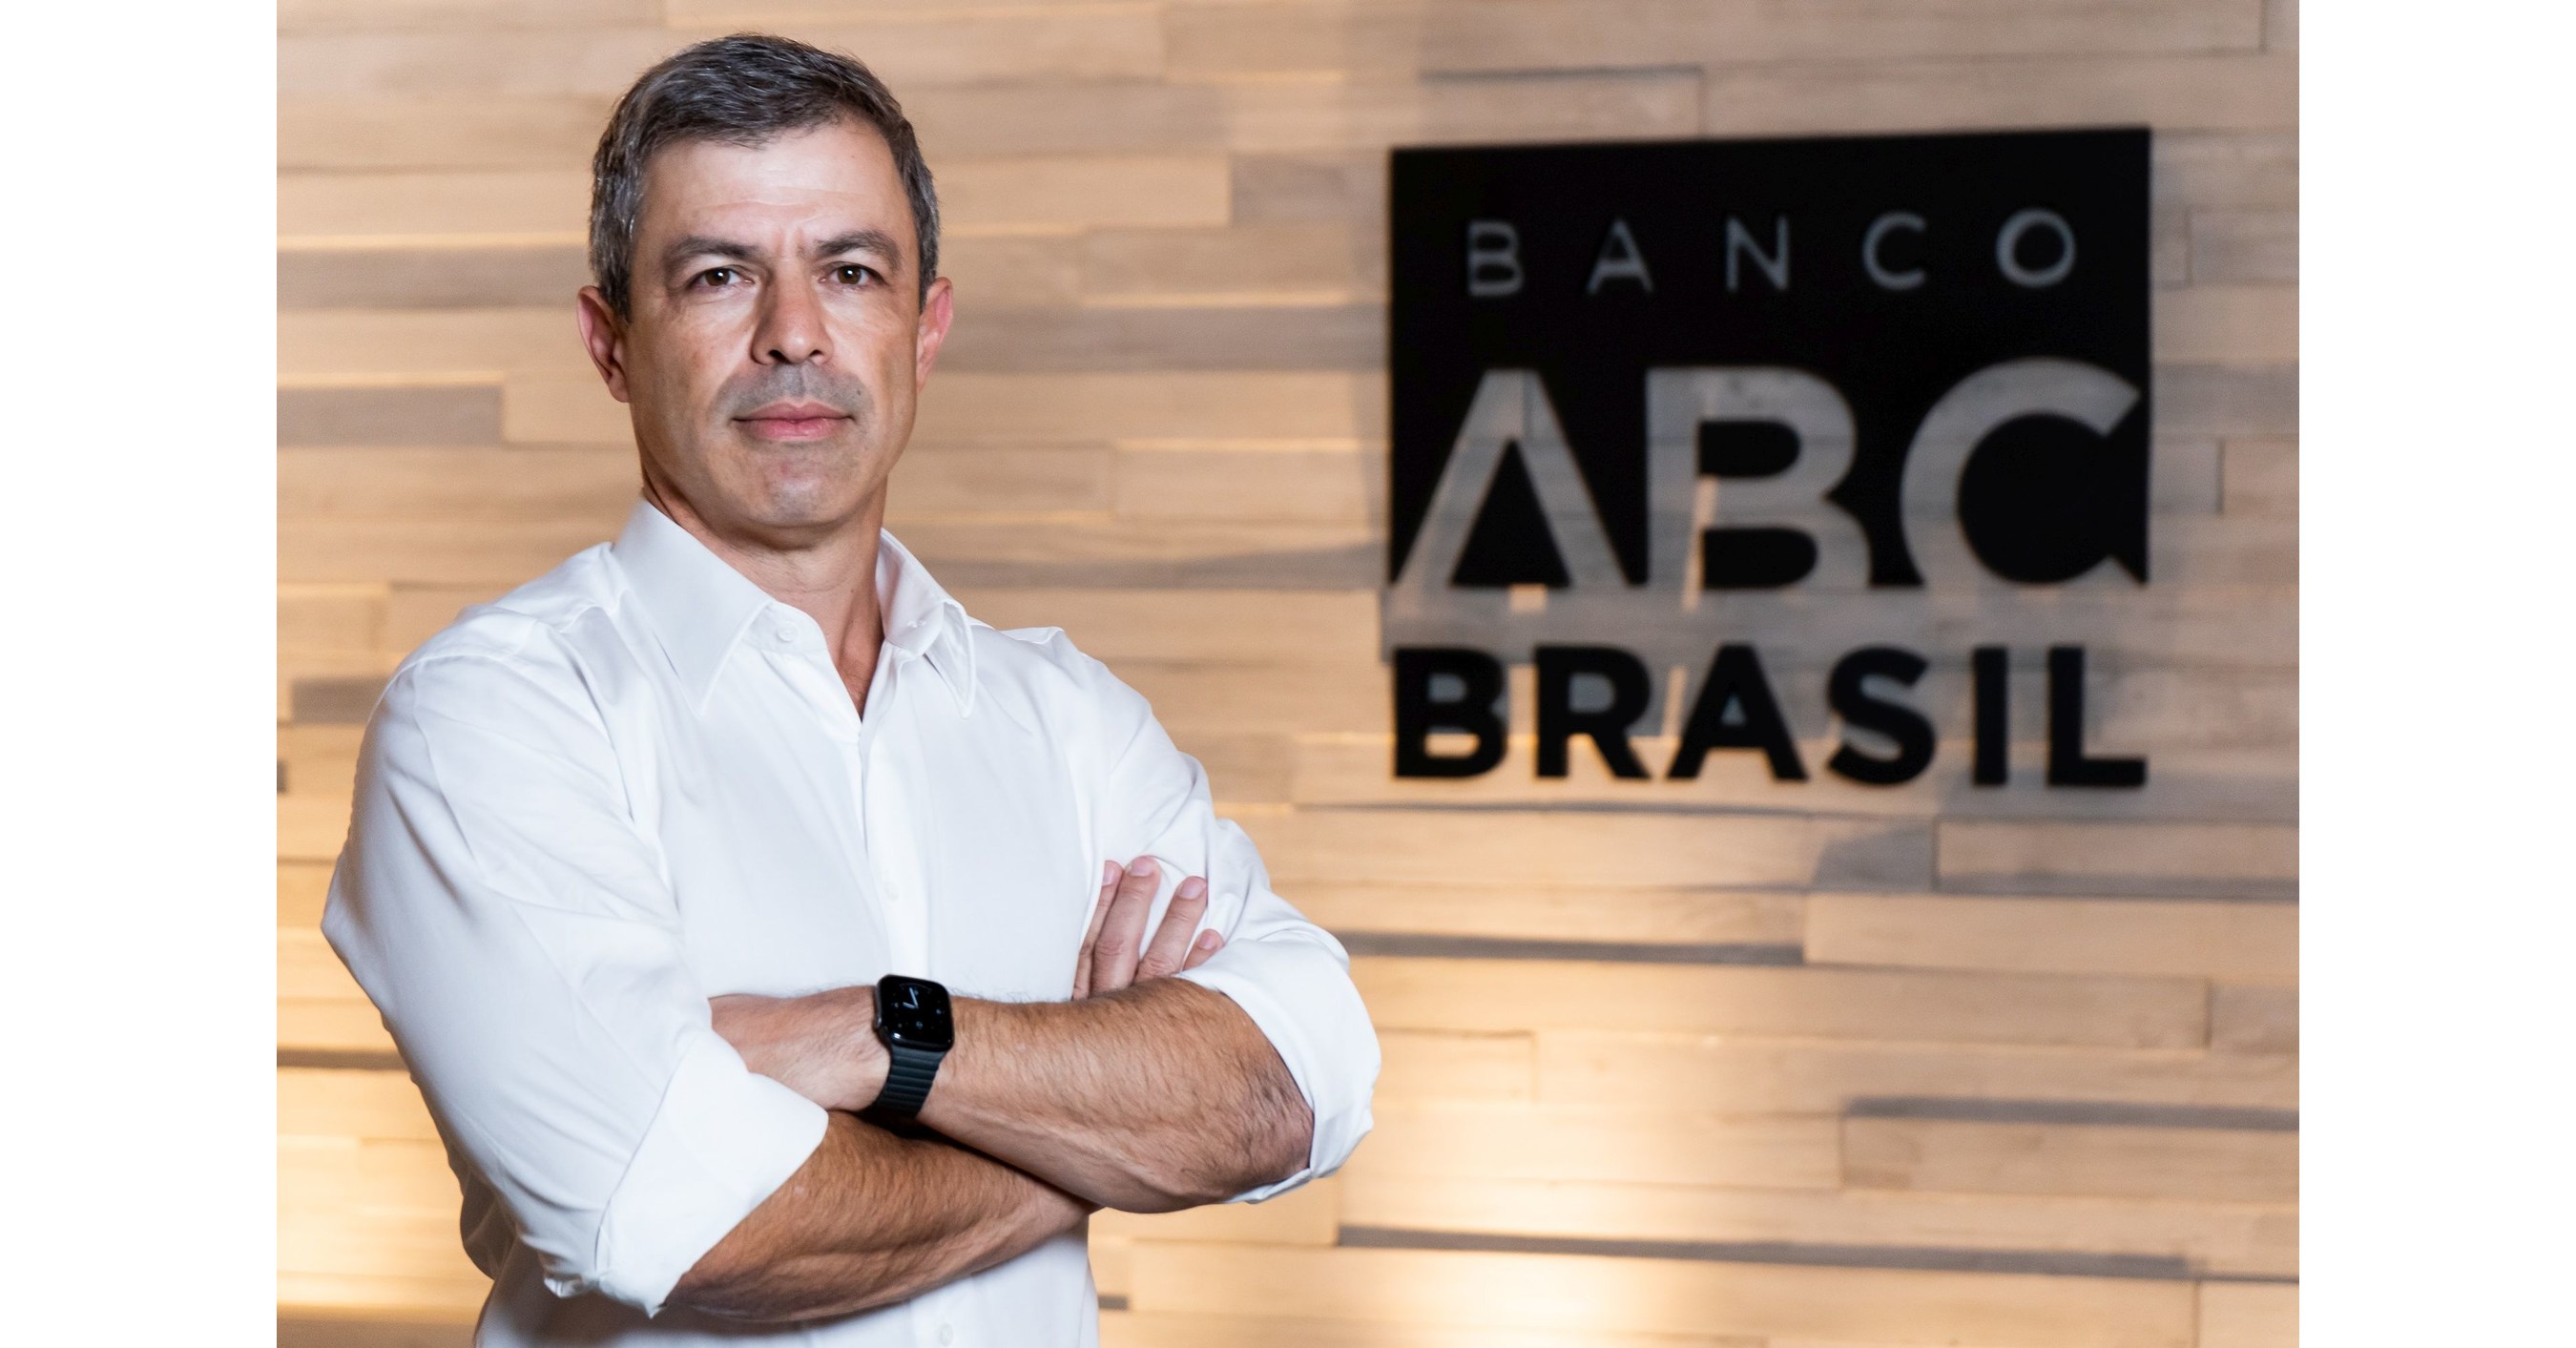 BANCO ABC BRASIL APK (Android App) - Free Download